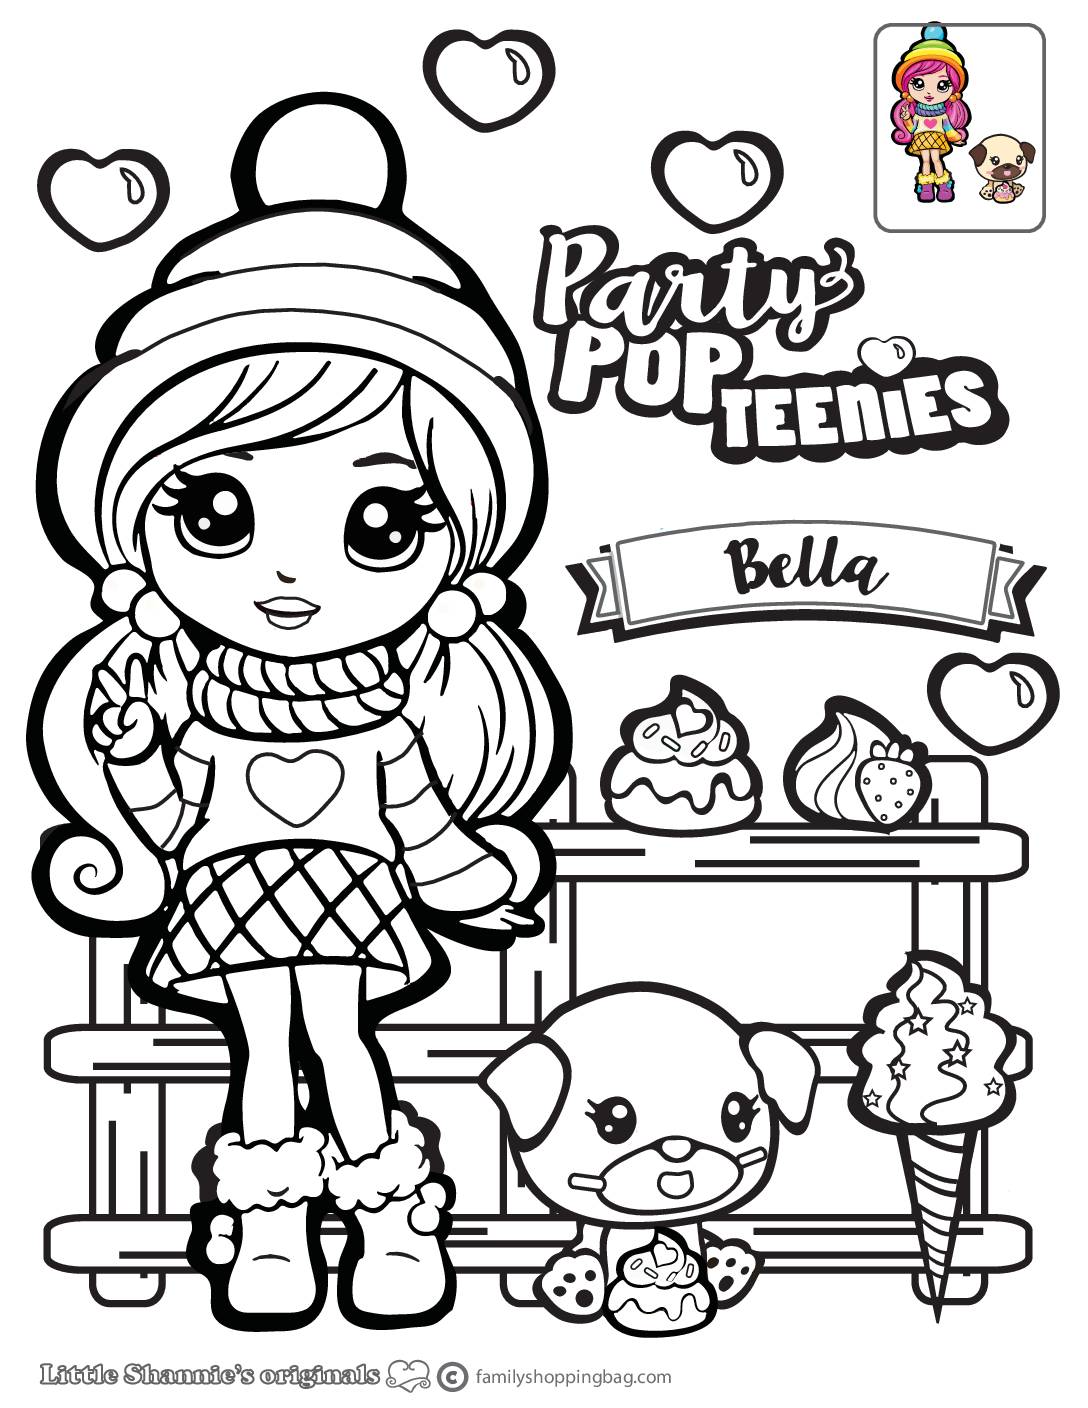 Bella Coloring Page Party Pop Teenies  pdf